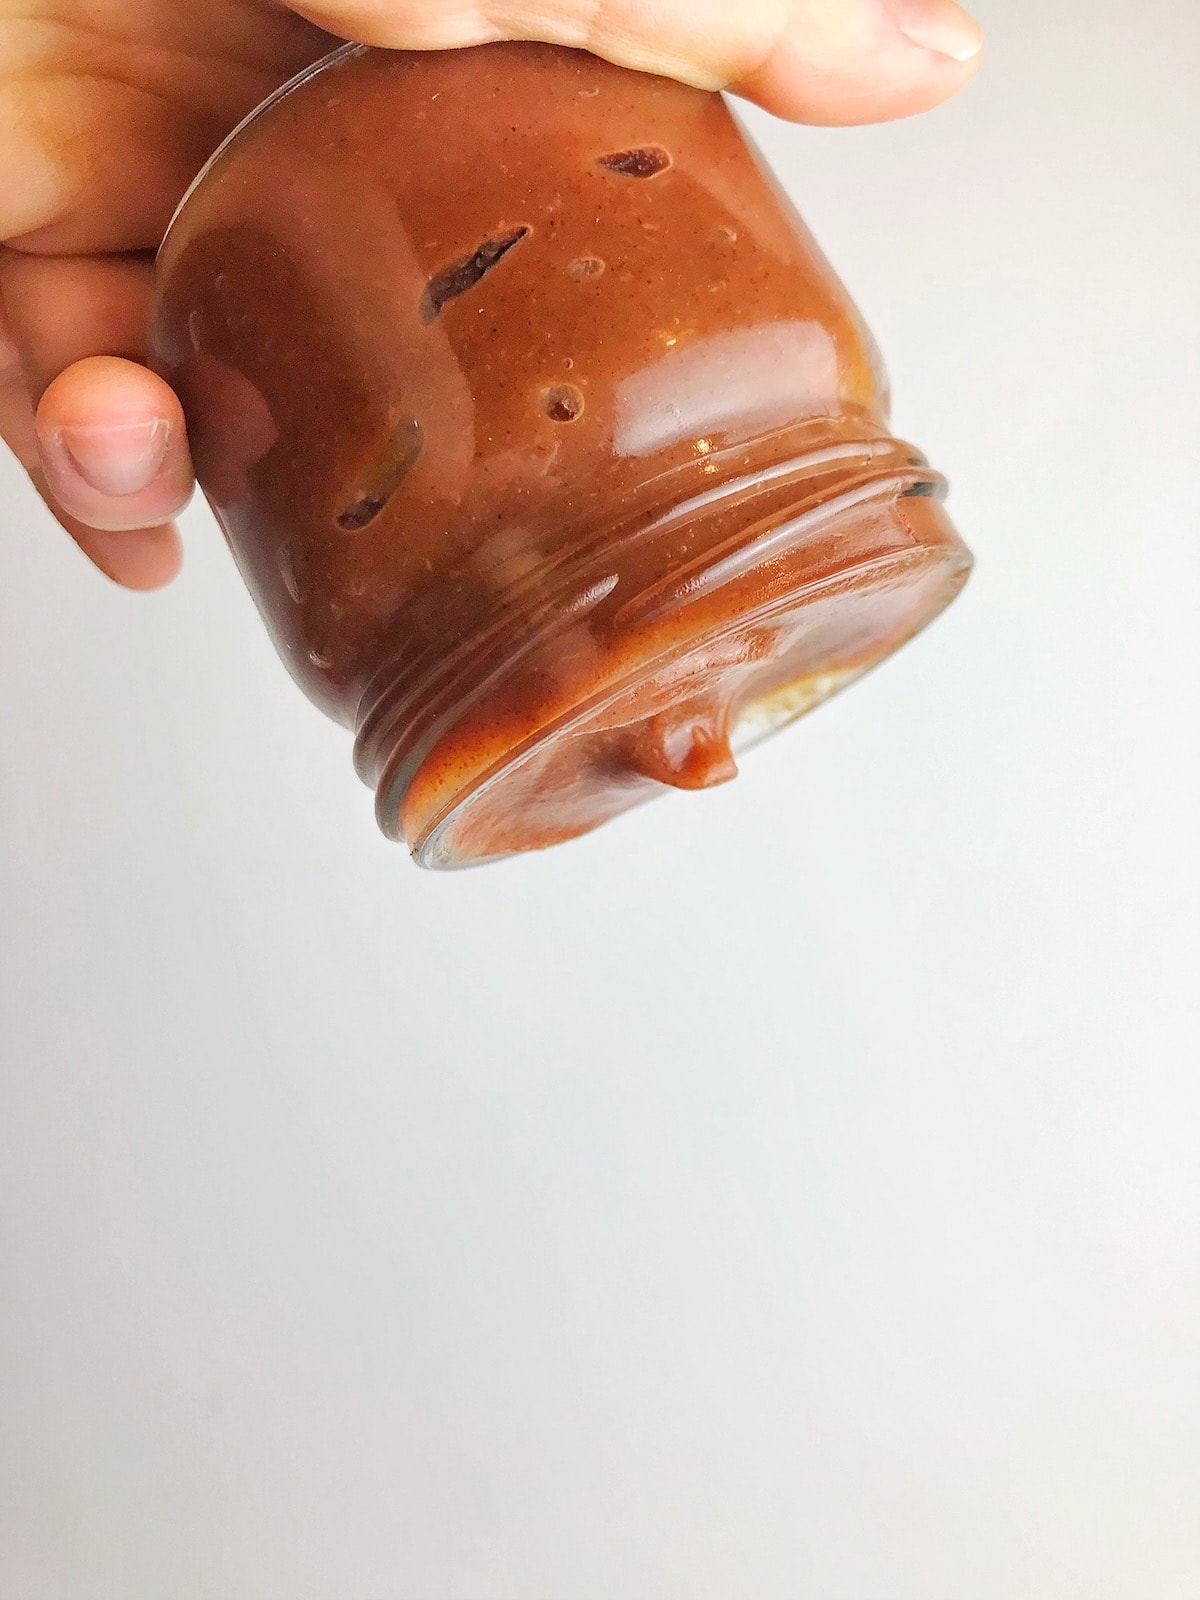 A hand holding a jar of apple butter upside down.